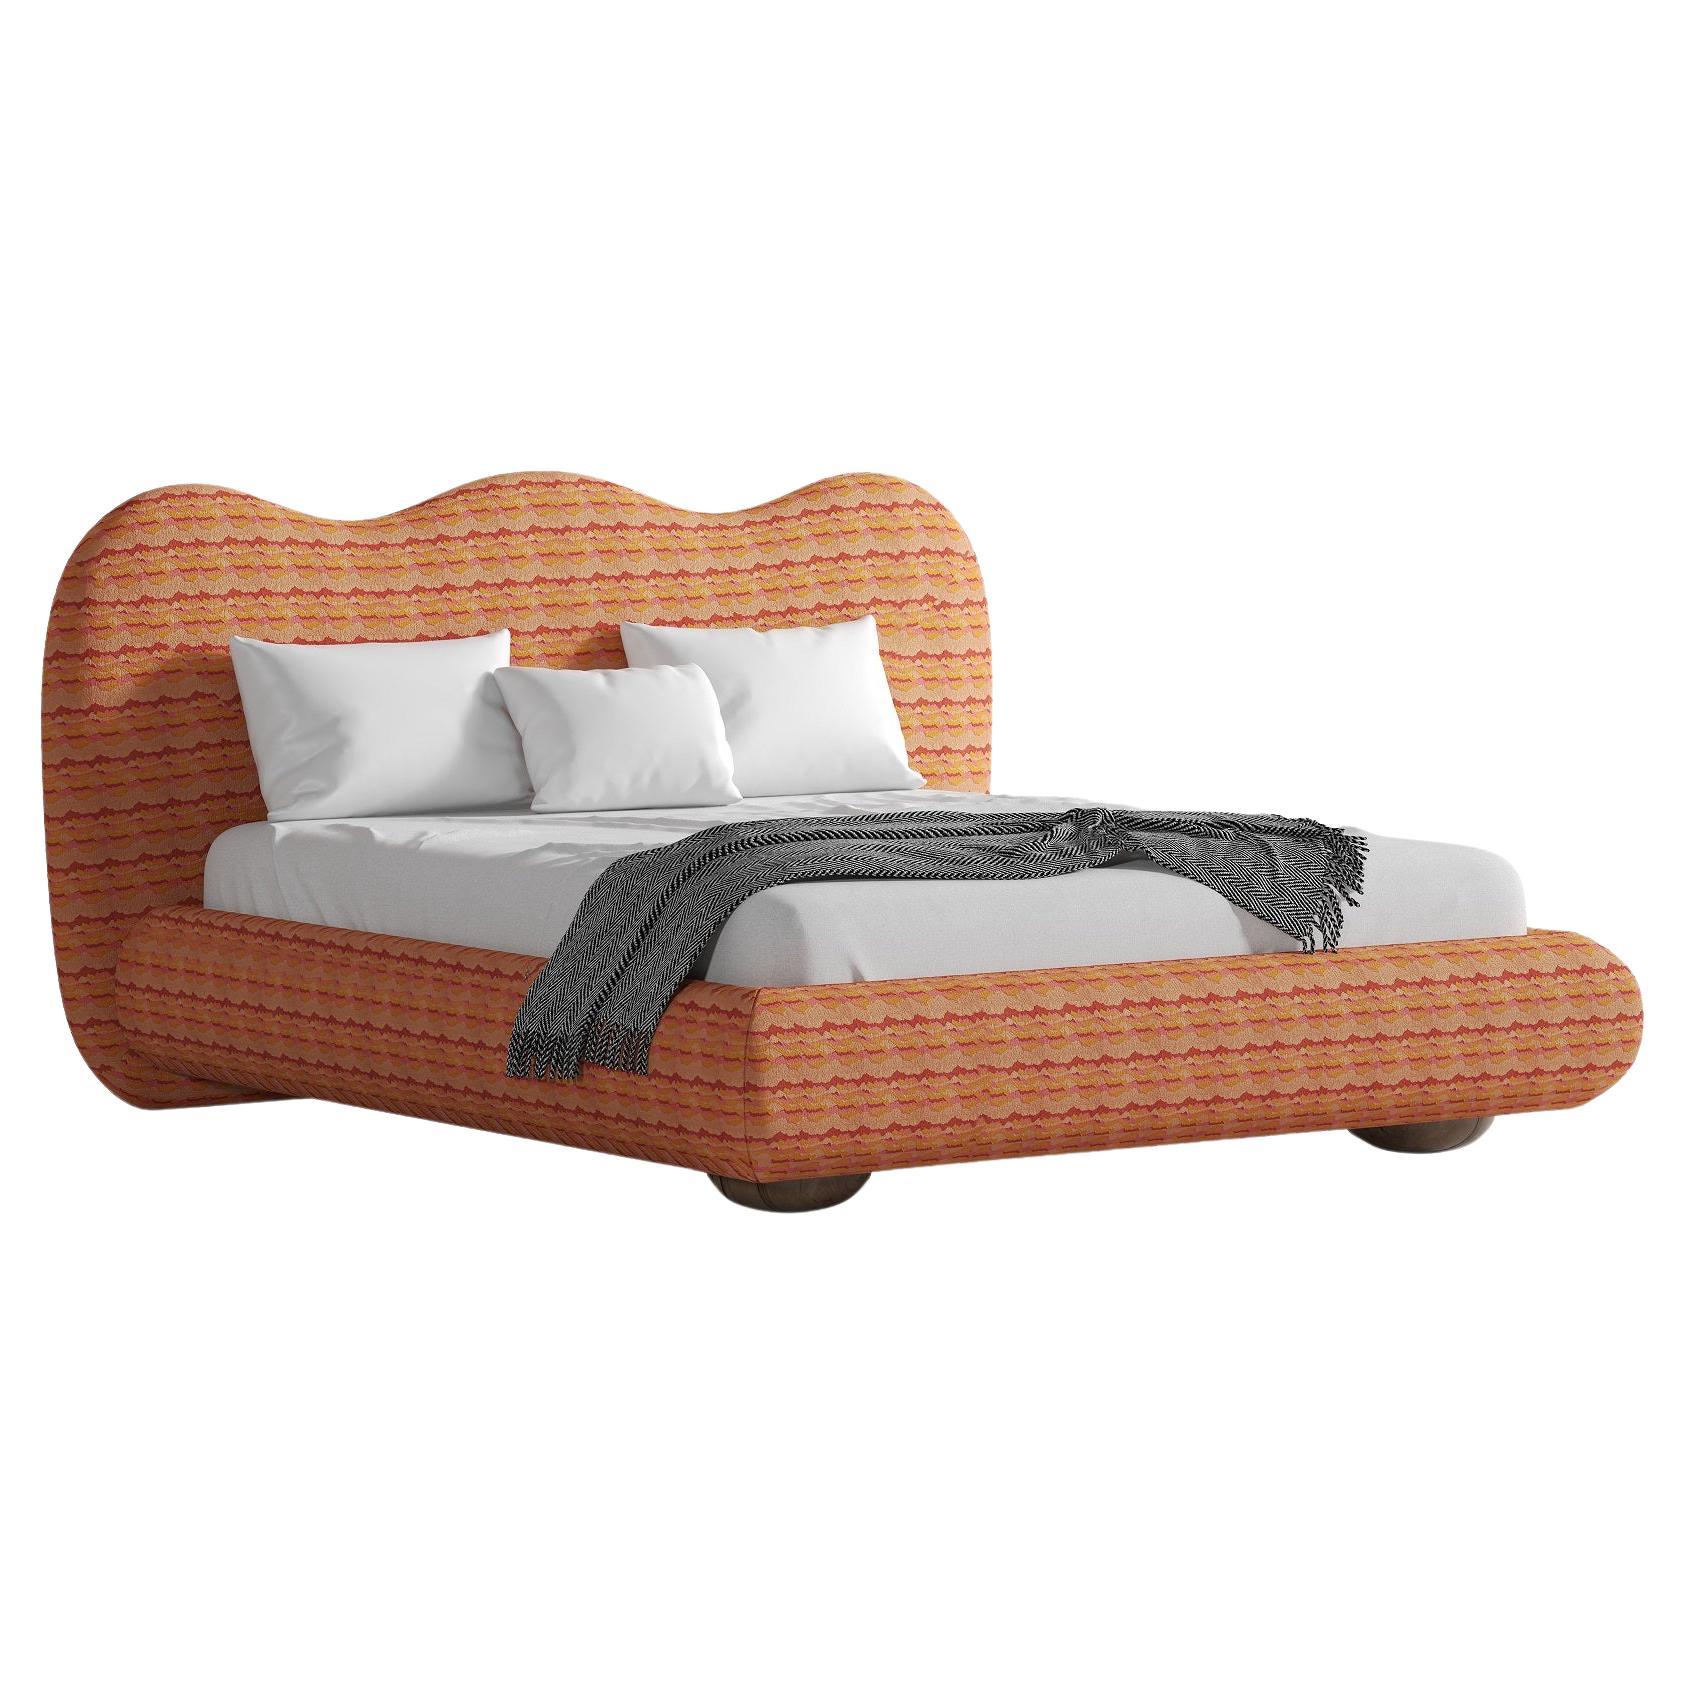 Dandy King Size-Bett in Königsgröße, angeboten in exklusivem Muster, 6 Farben